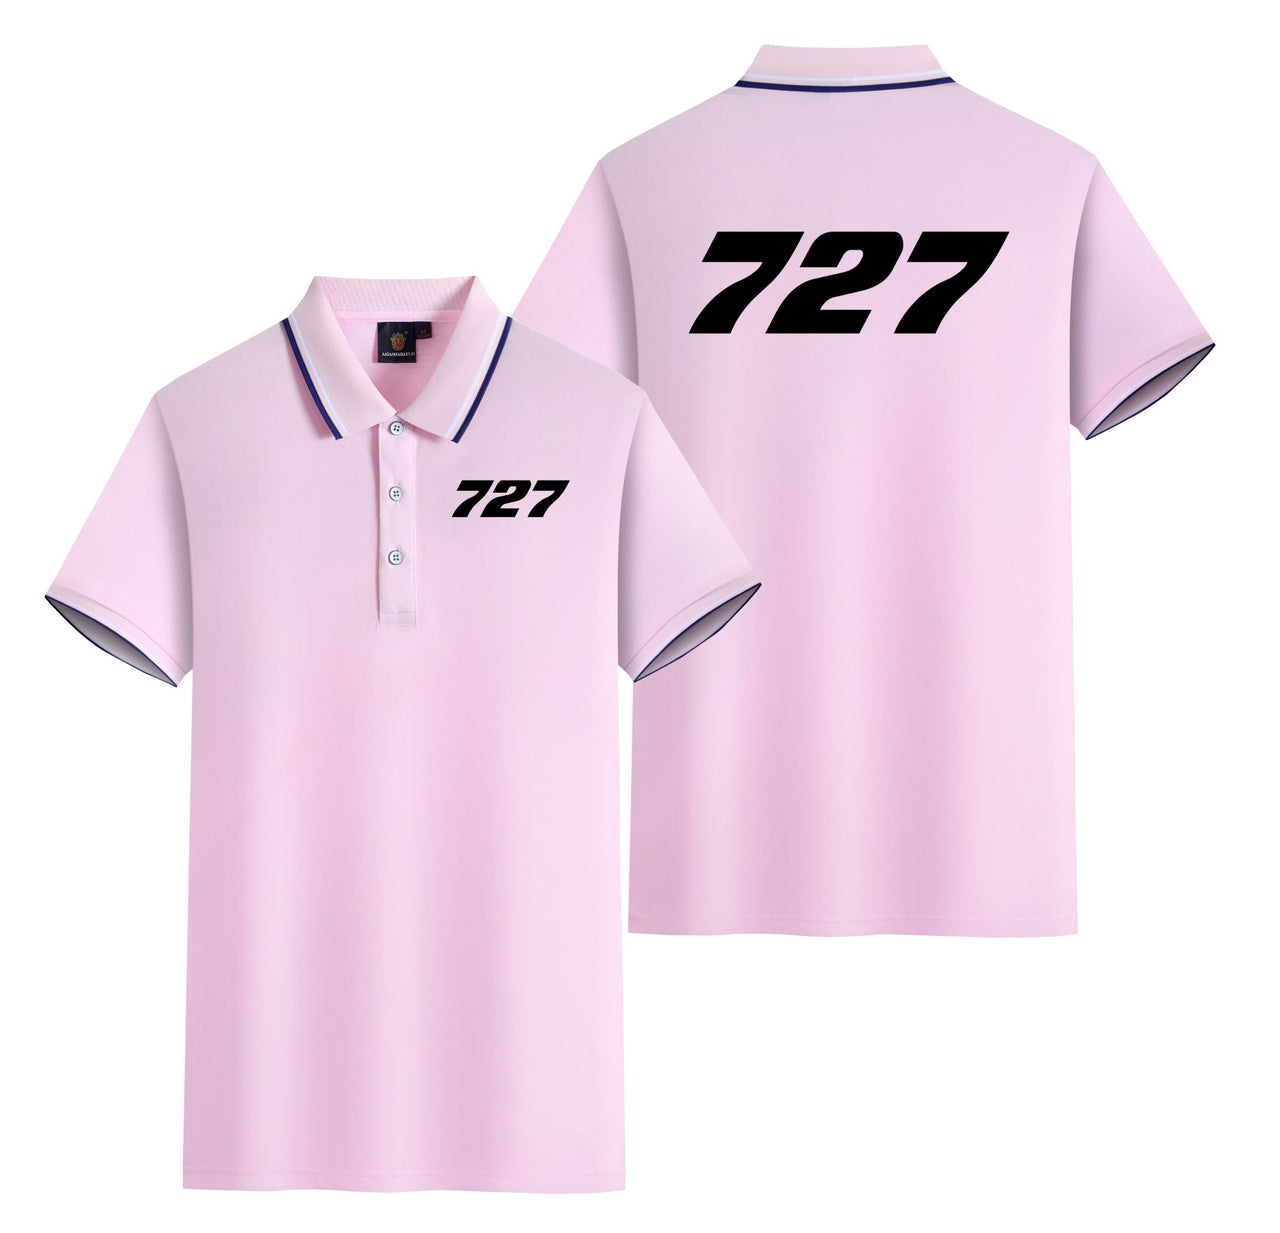 727 Flat Text Designed Stylish Polo T-Shirts (Double-Side)